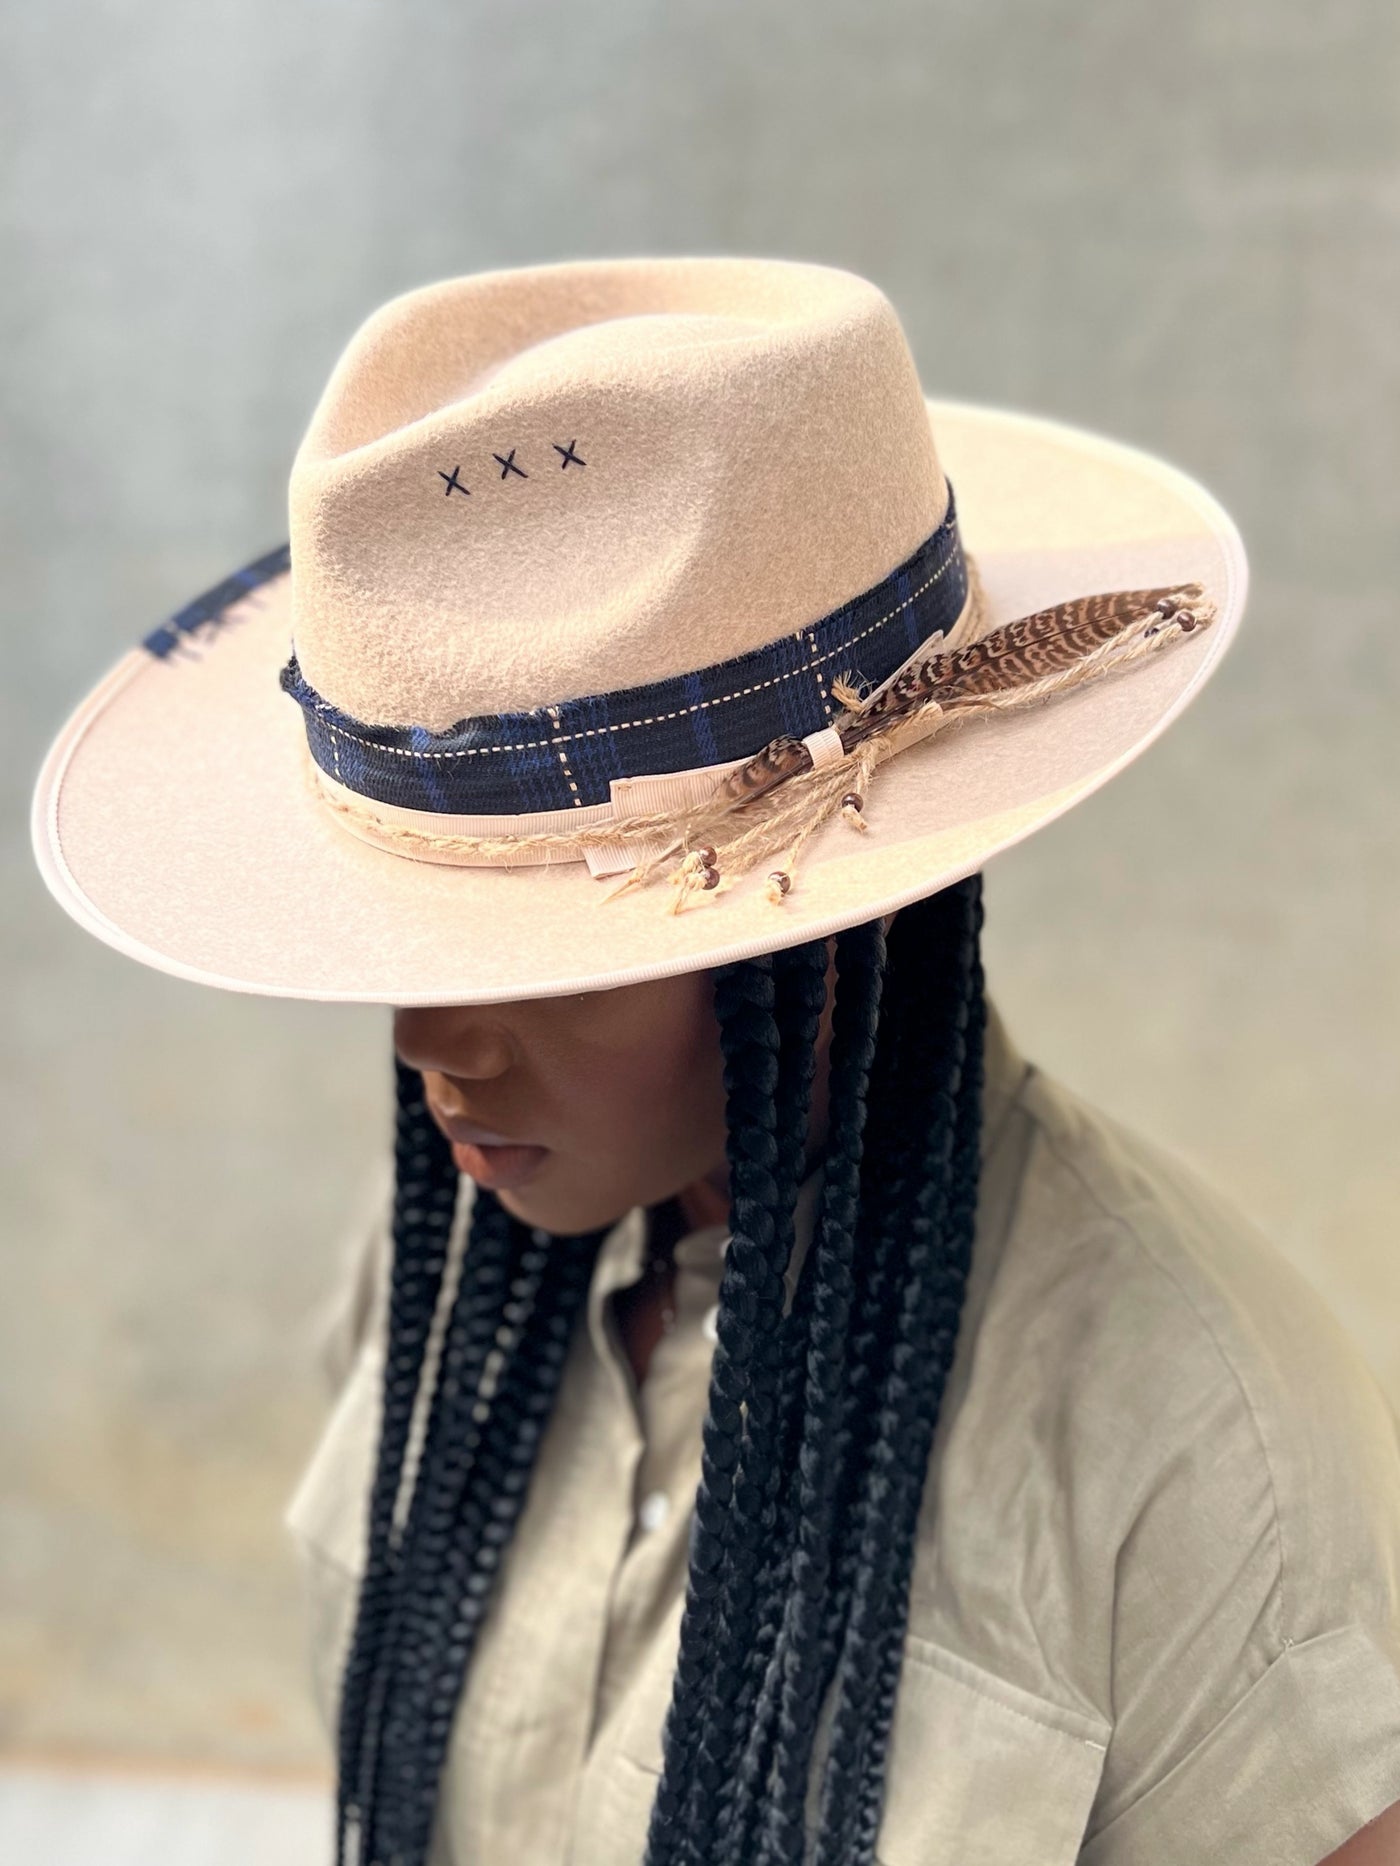 Scottsdale | Luxury Hat